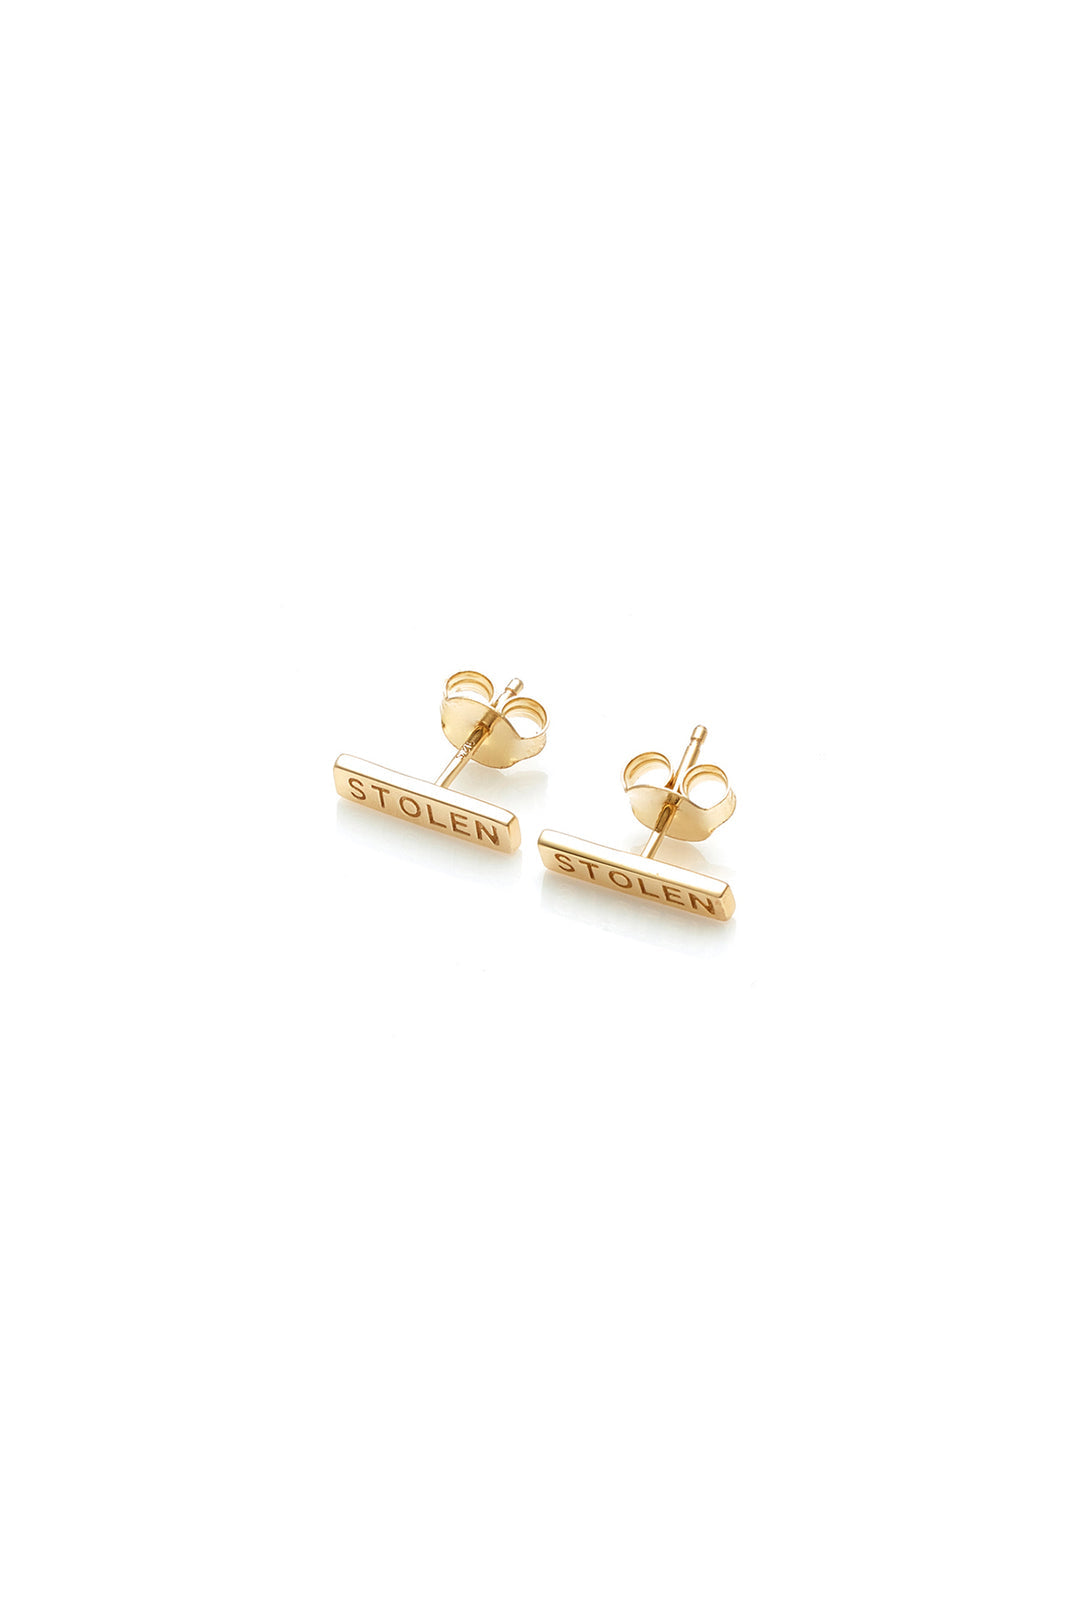 Tiny Stolen Bar Earrings - Gold - JWL17017GP